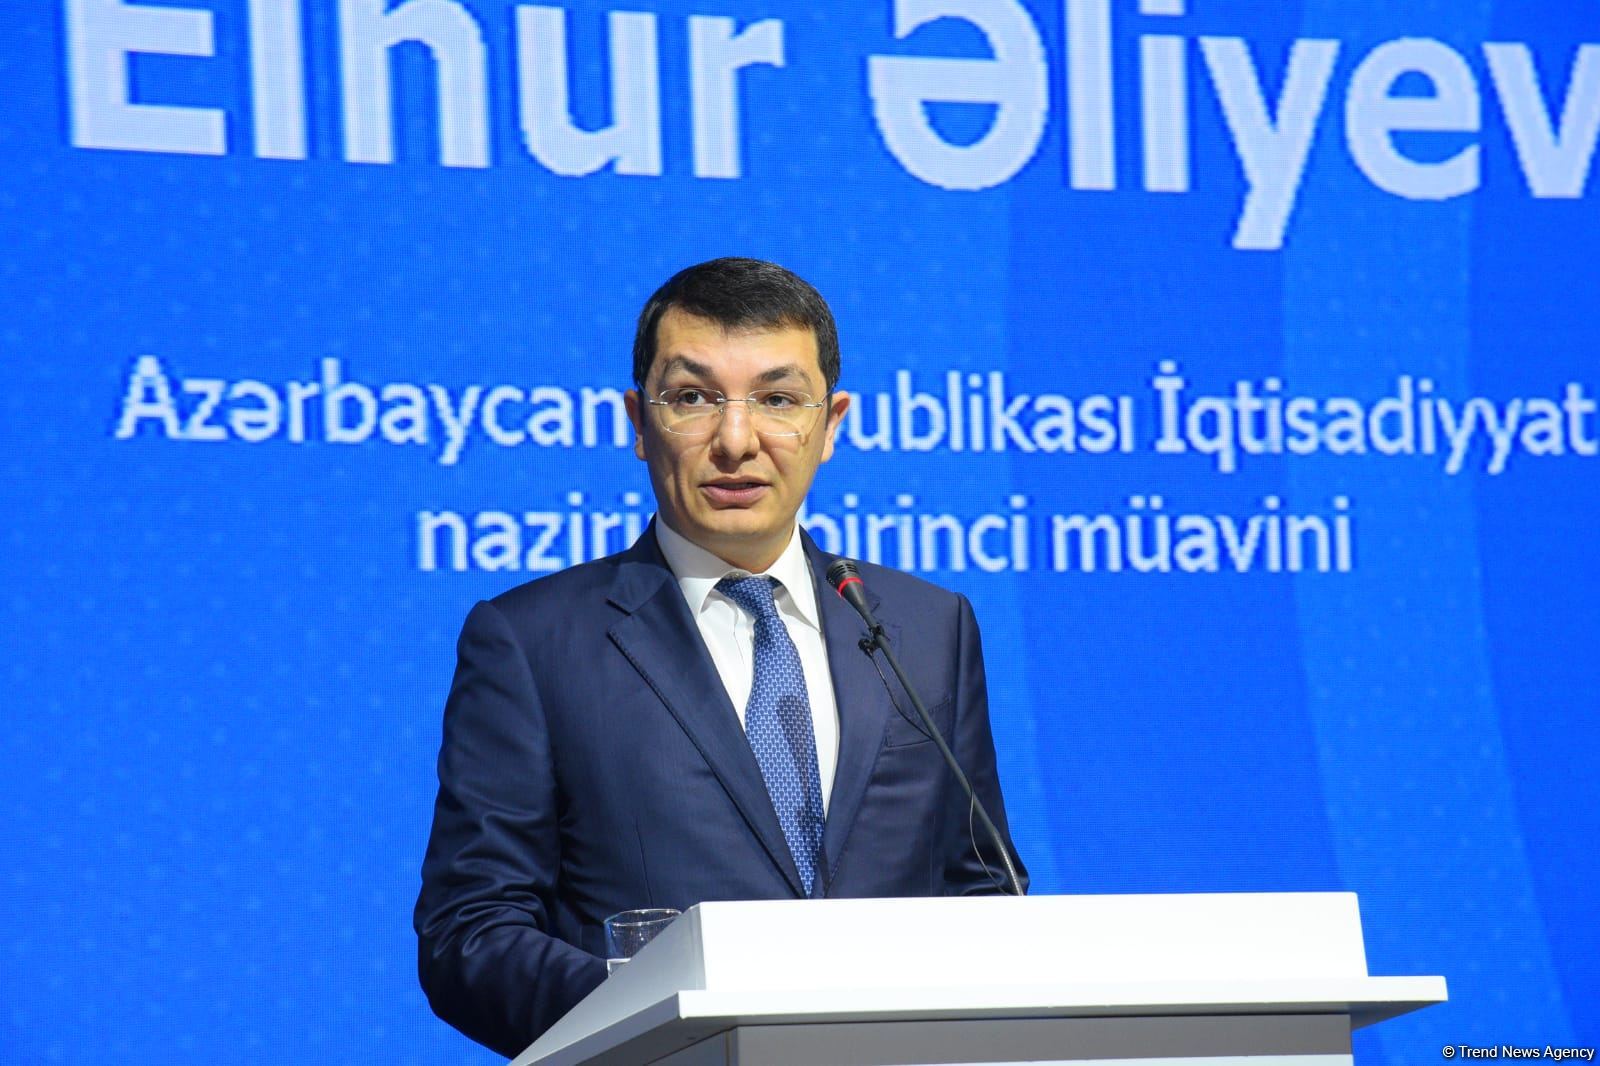 Azerbaijan to open its first digital opportunities center in Baku - deputy minister